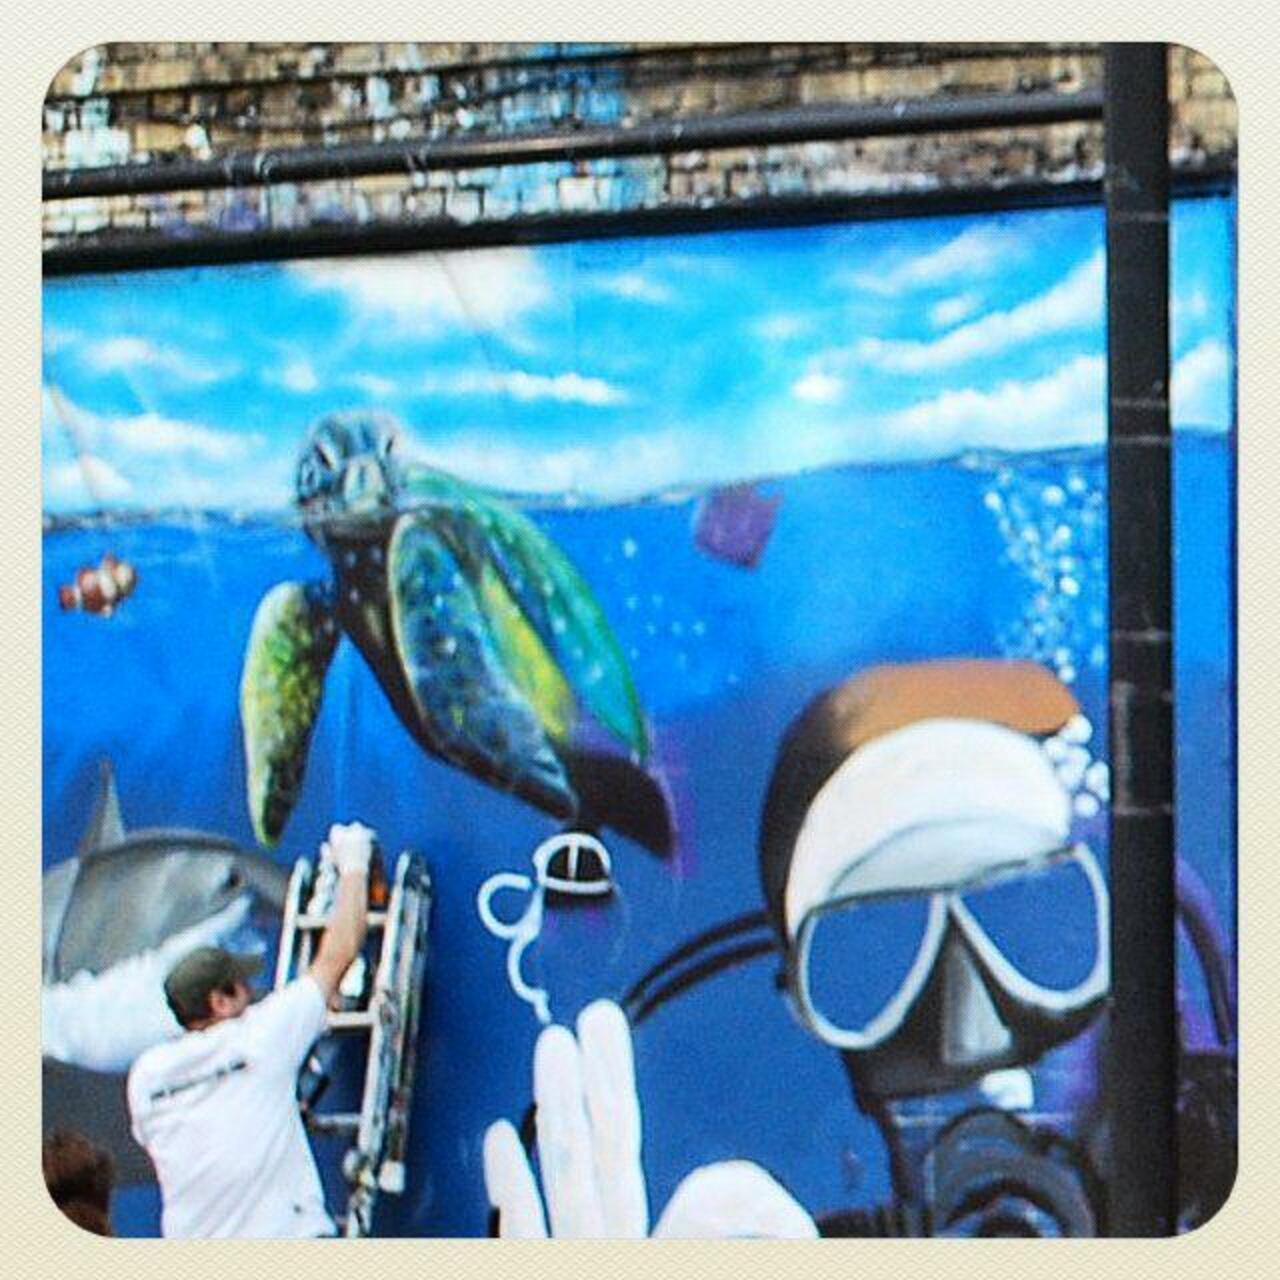 RT @StArtEverywhere: WiP art by Gnasher  
#Graffiti #StreetArt #UrbanArt #GnasherMurals #WiP #BehindTheCurtain #ShoreditchCurtain #Shor… http://t.co/AOEnNvcXwE